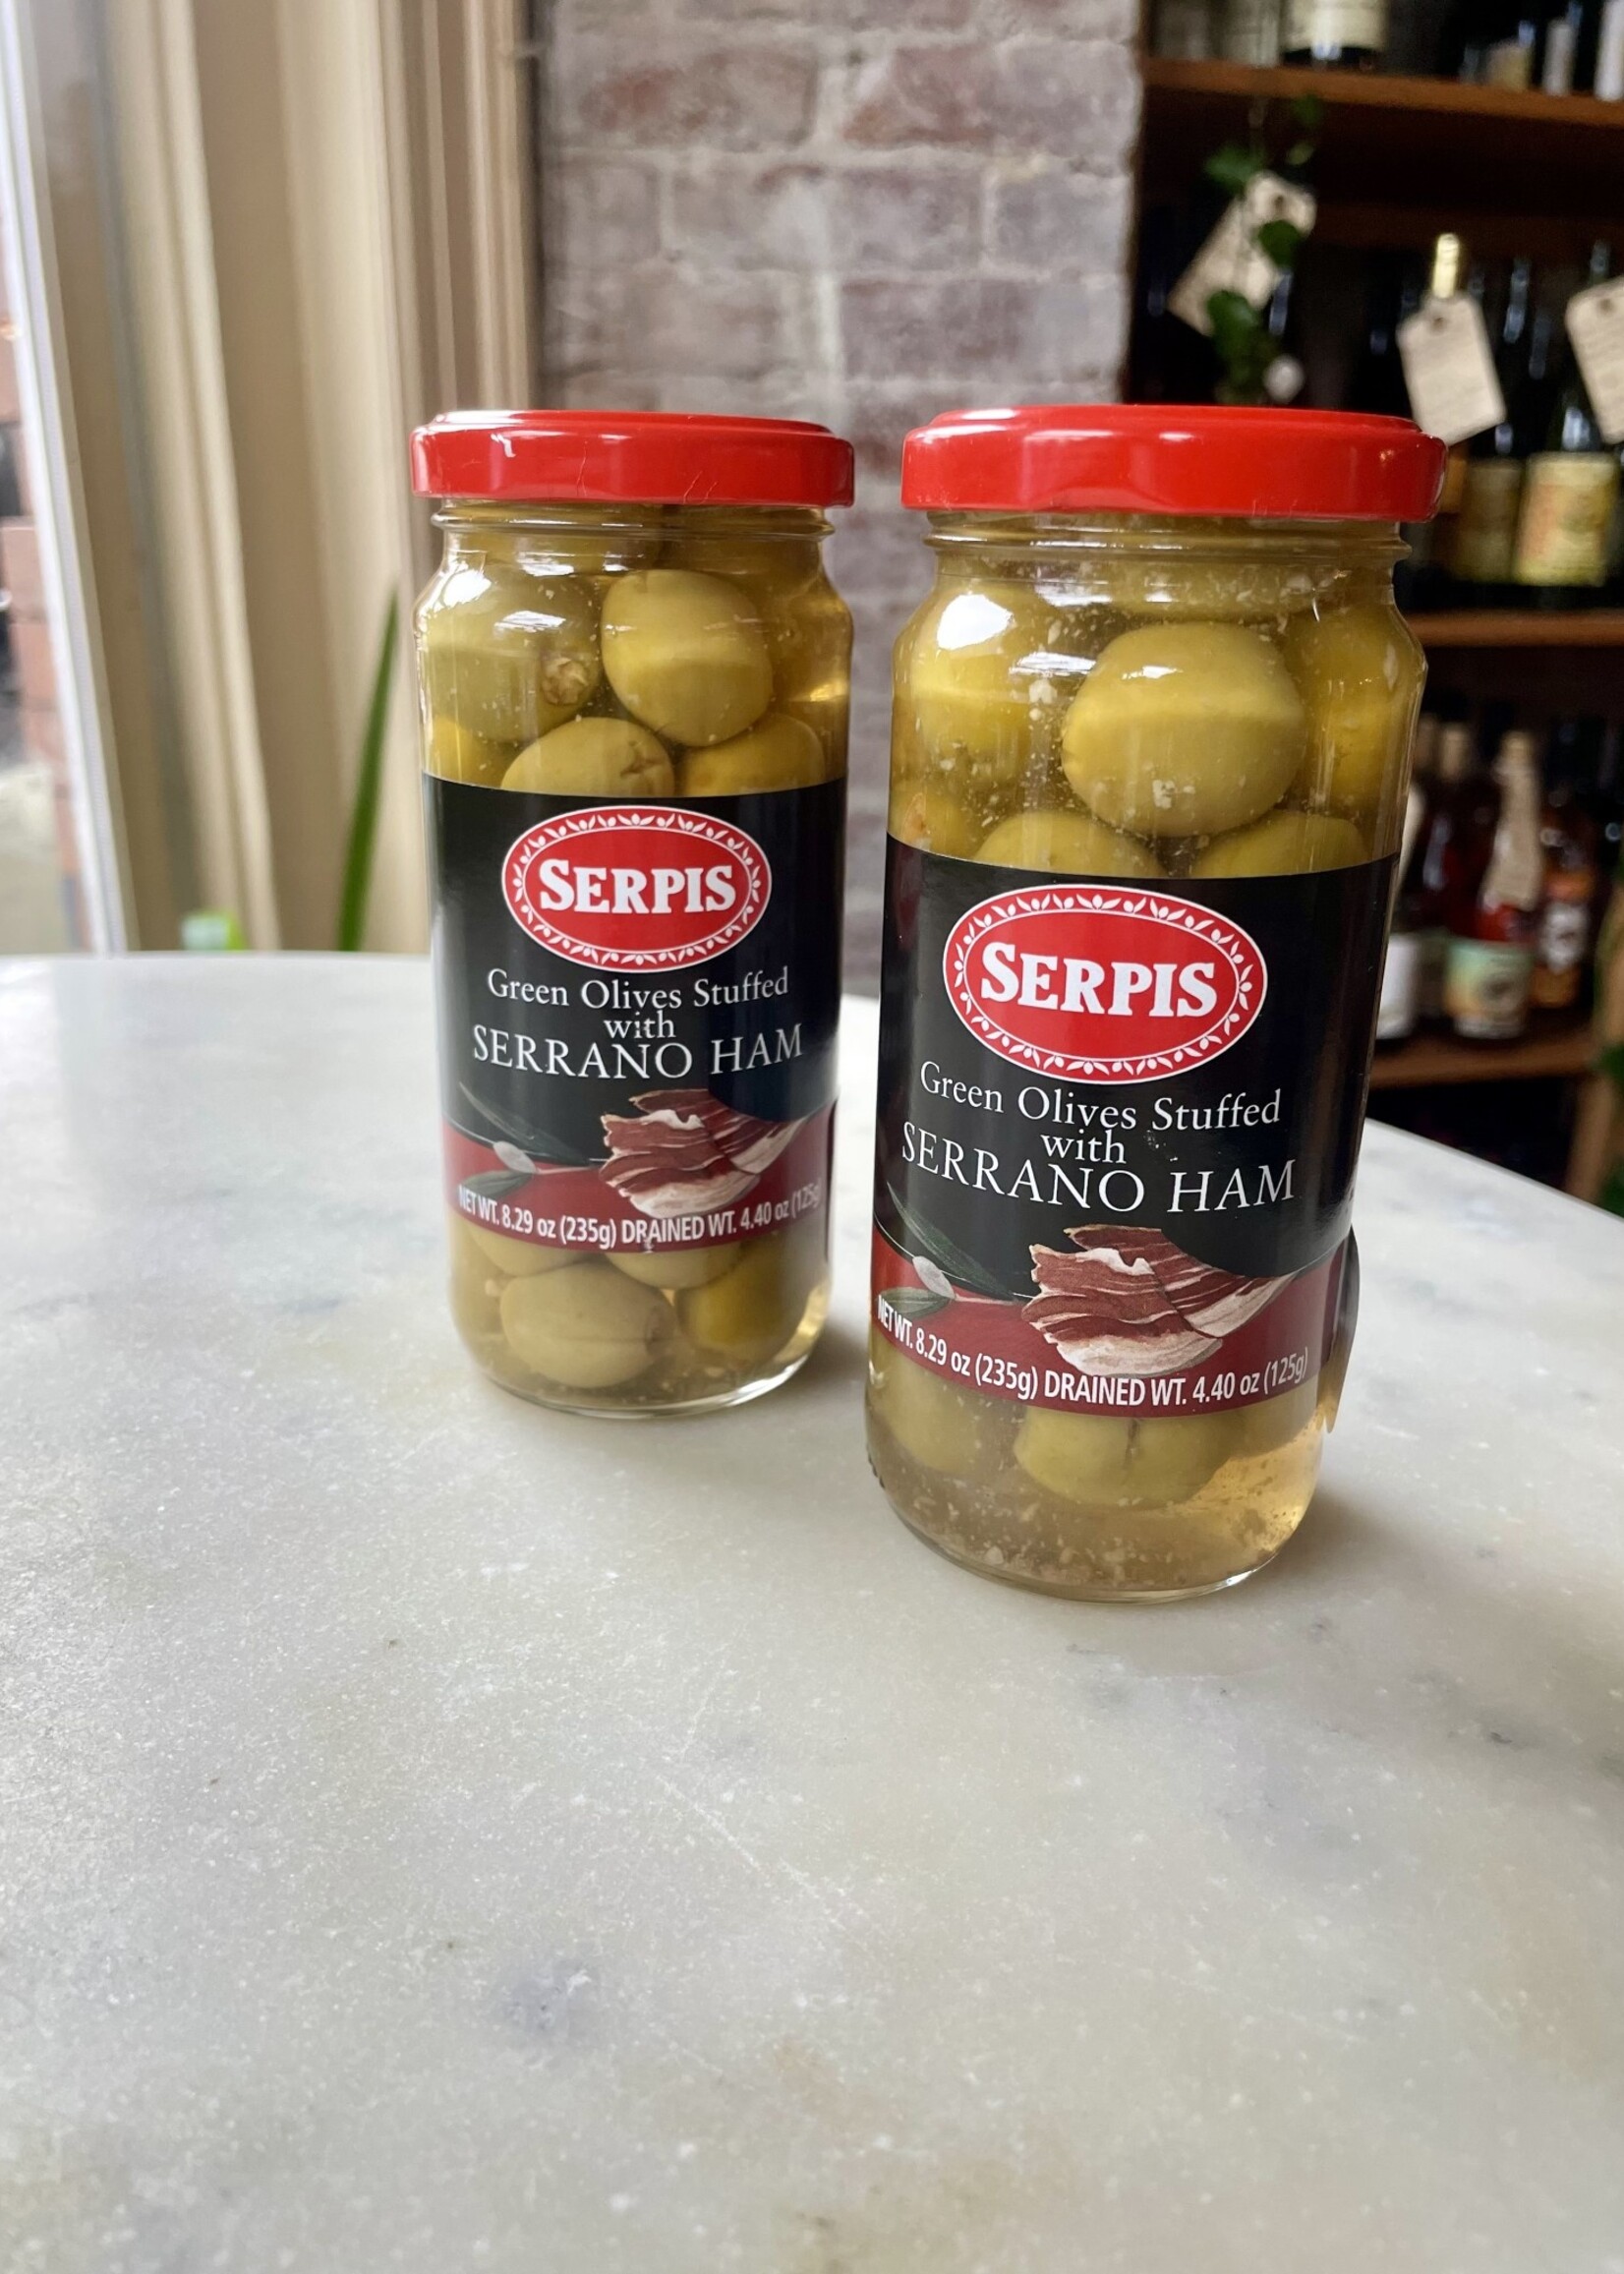 Serpis Serrano Stuffed Olives